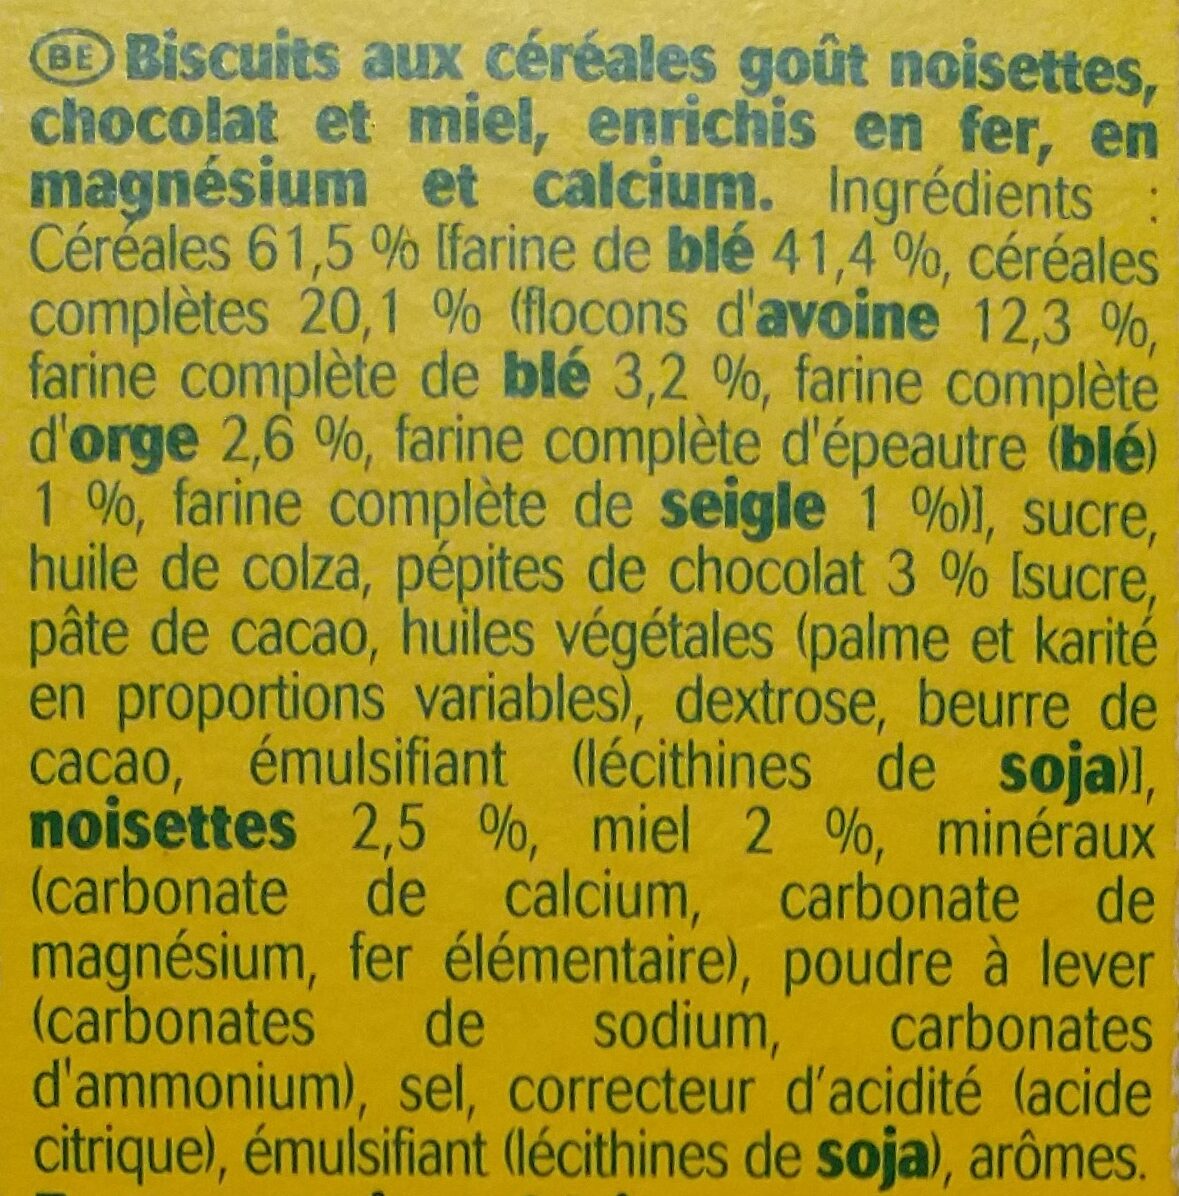 BelVita original miel choco-noisettes - Ingredients - fr